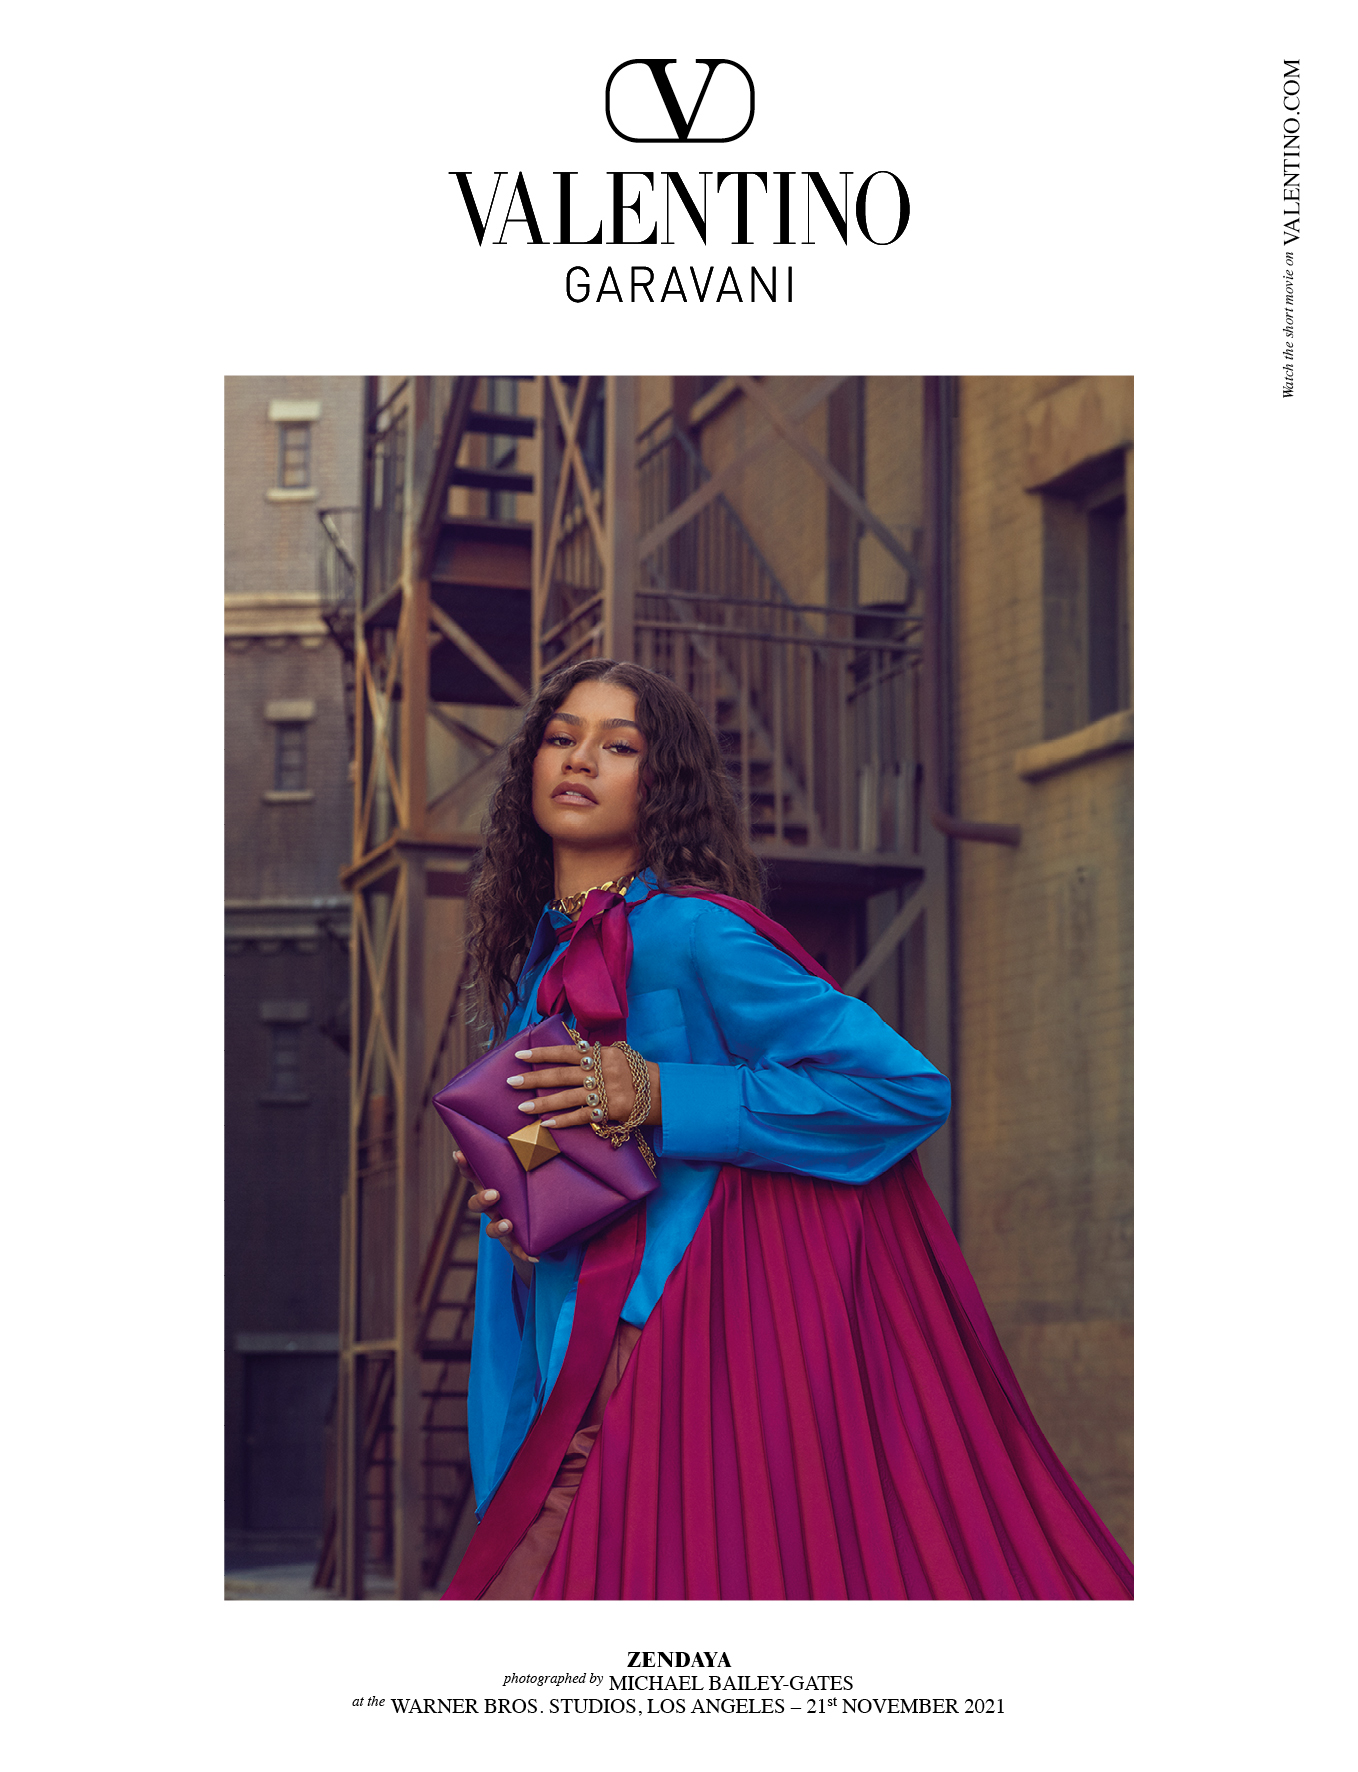 Louis Vuitton Debuts Zendaya as New Ambassador, Finally